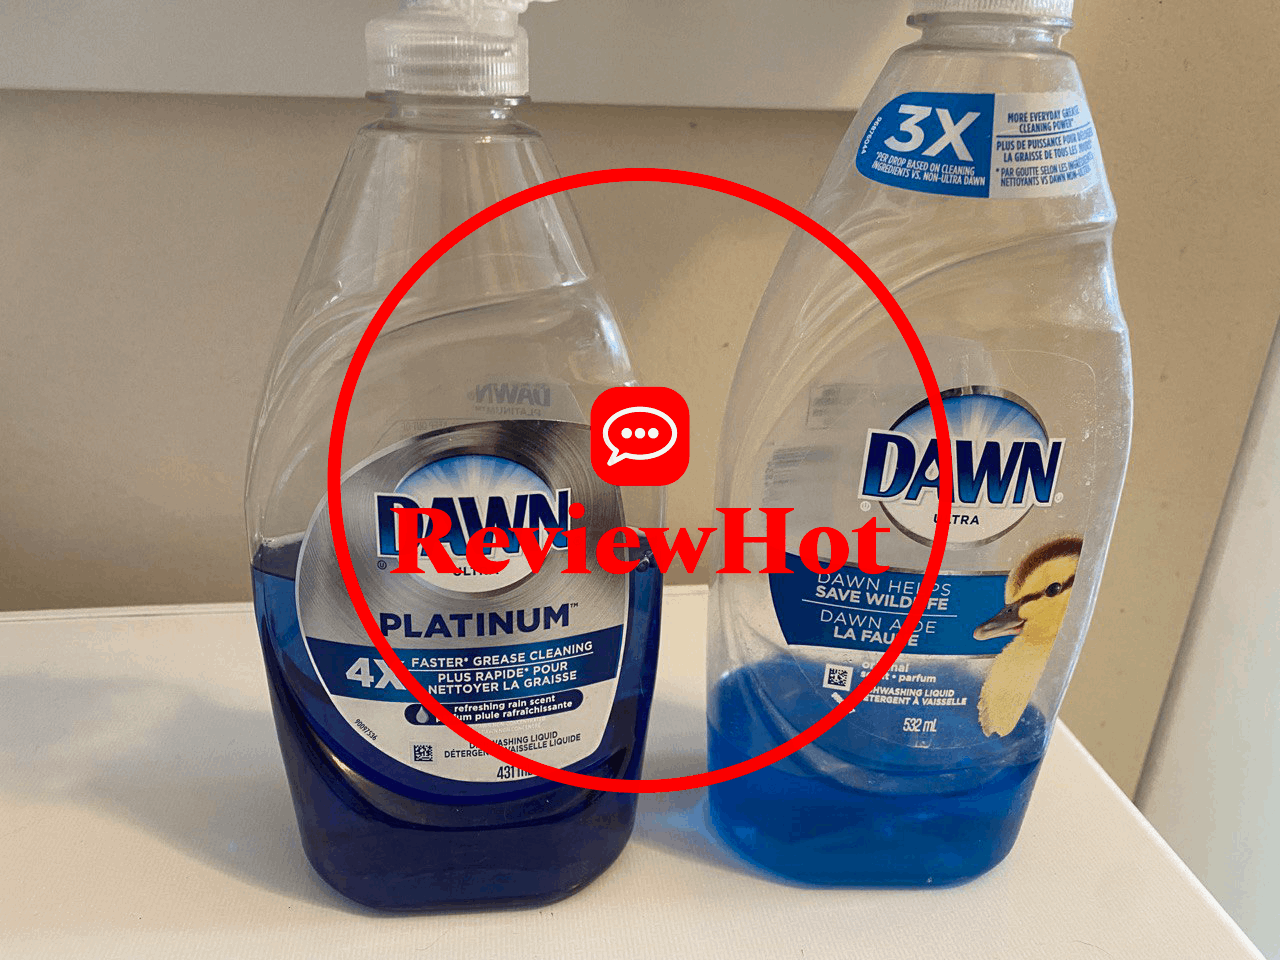 Dawn Ultra and Platinum Dishwashing Liquid product bottles